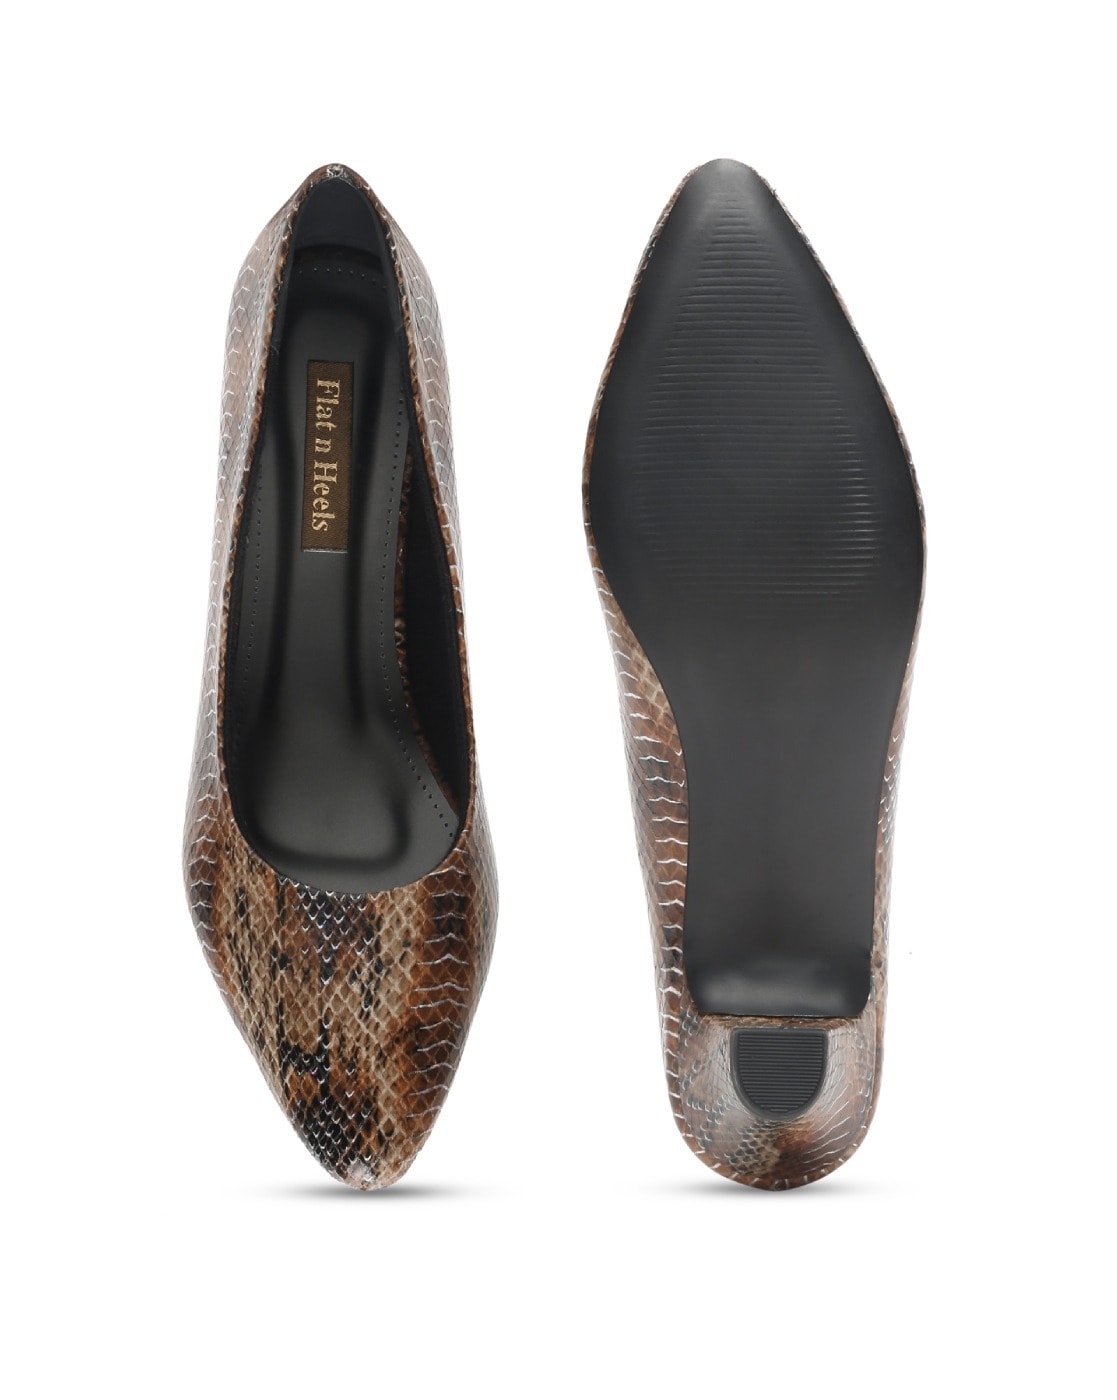 Buy Beige Heeled Shoes for Women by Flat n Heels Online